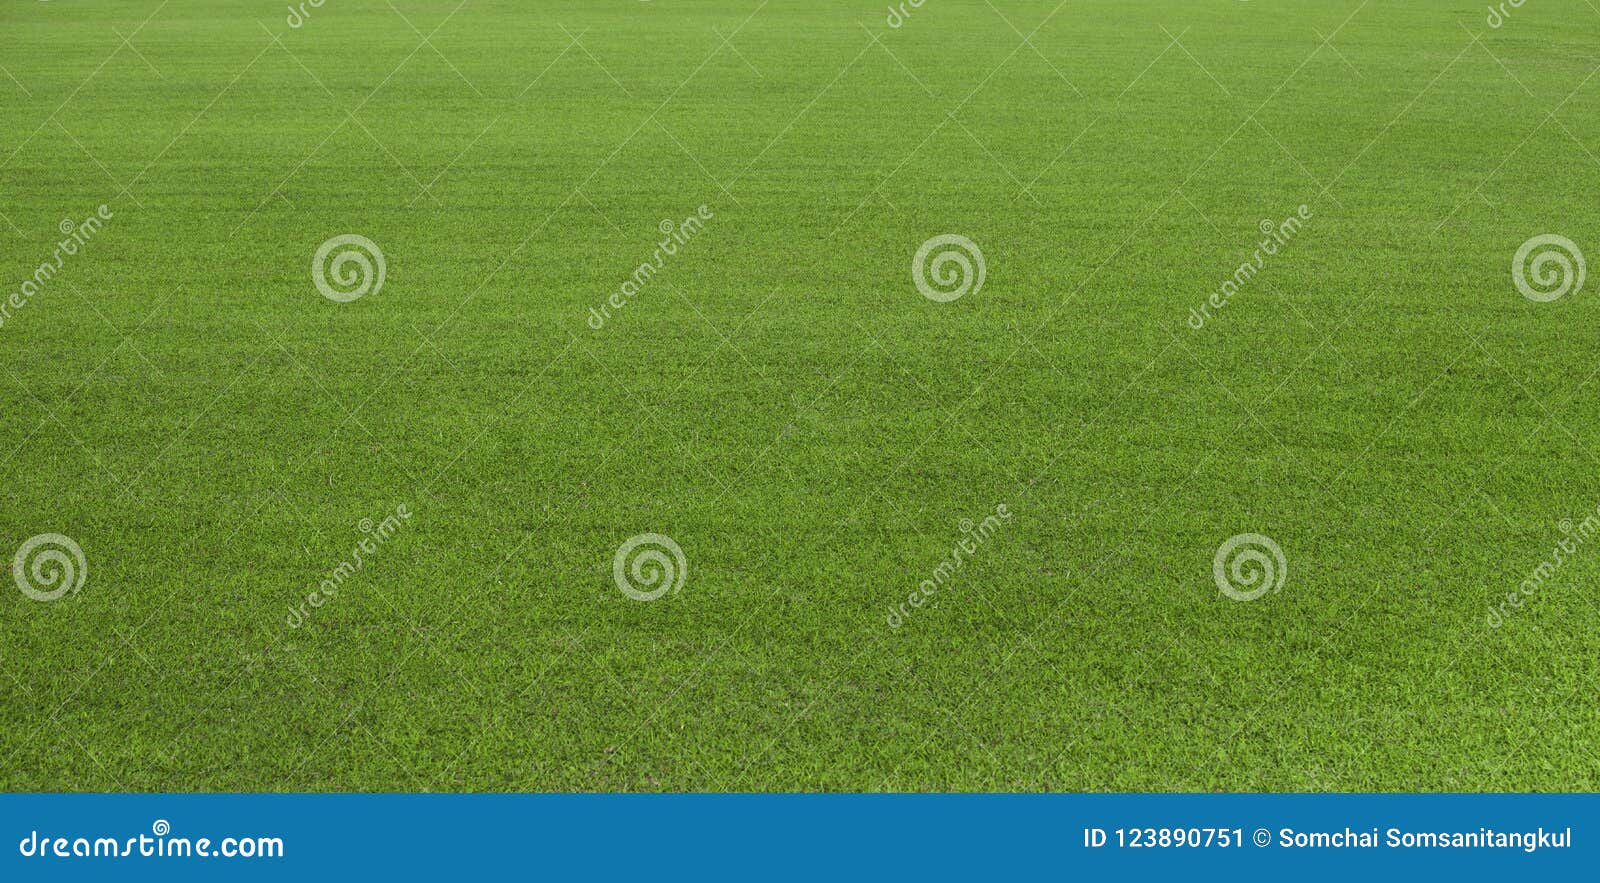 green grass field, green lawn. green grass for golf course, soccer, football, sport. green turf grass texture and background for d